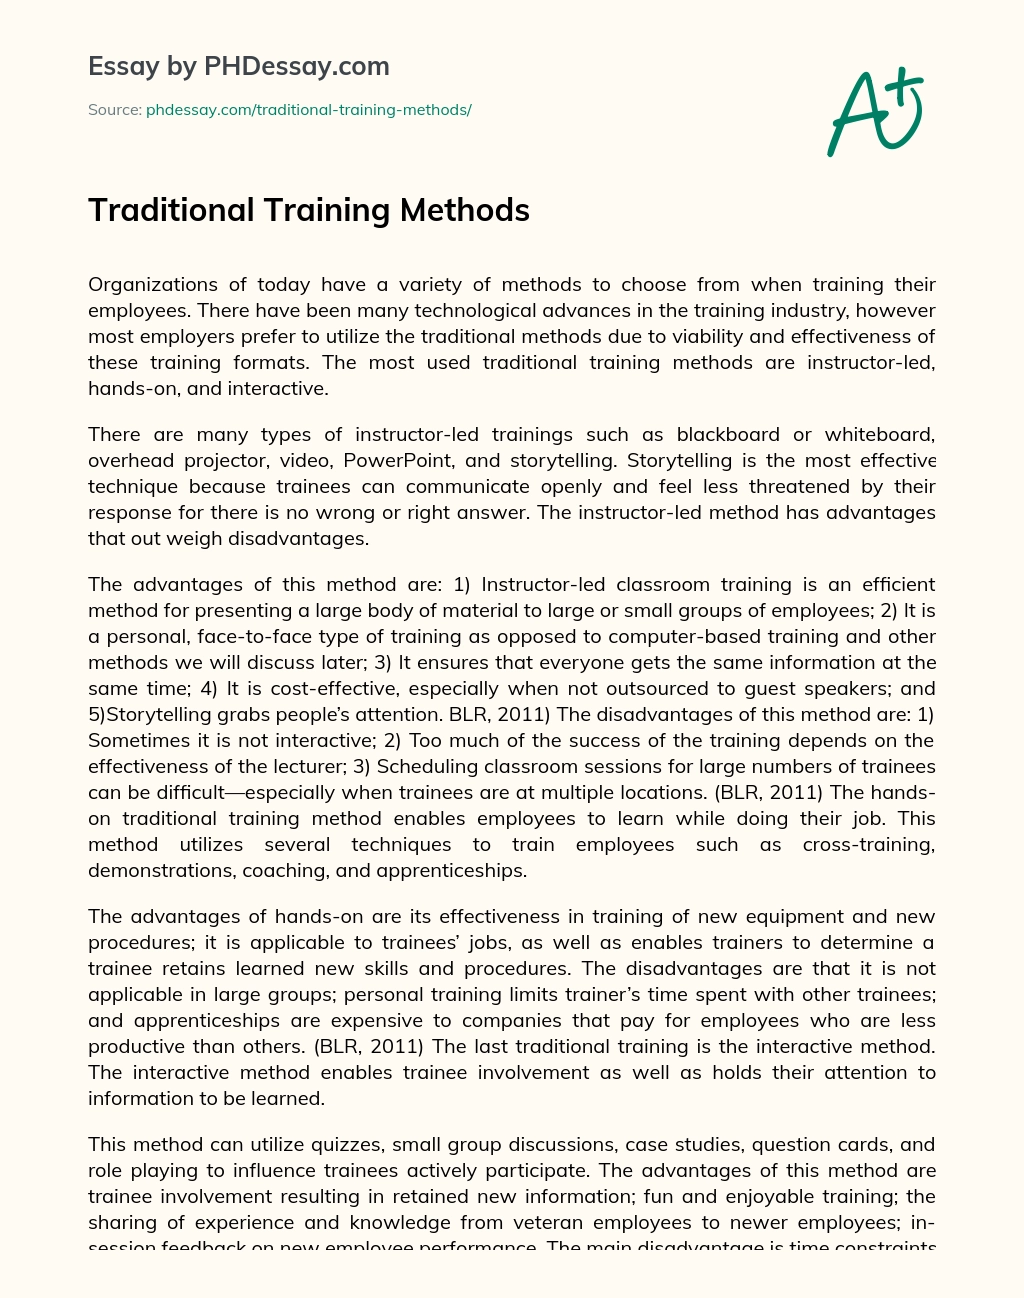 Traditional Training Methods essay